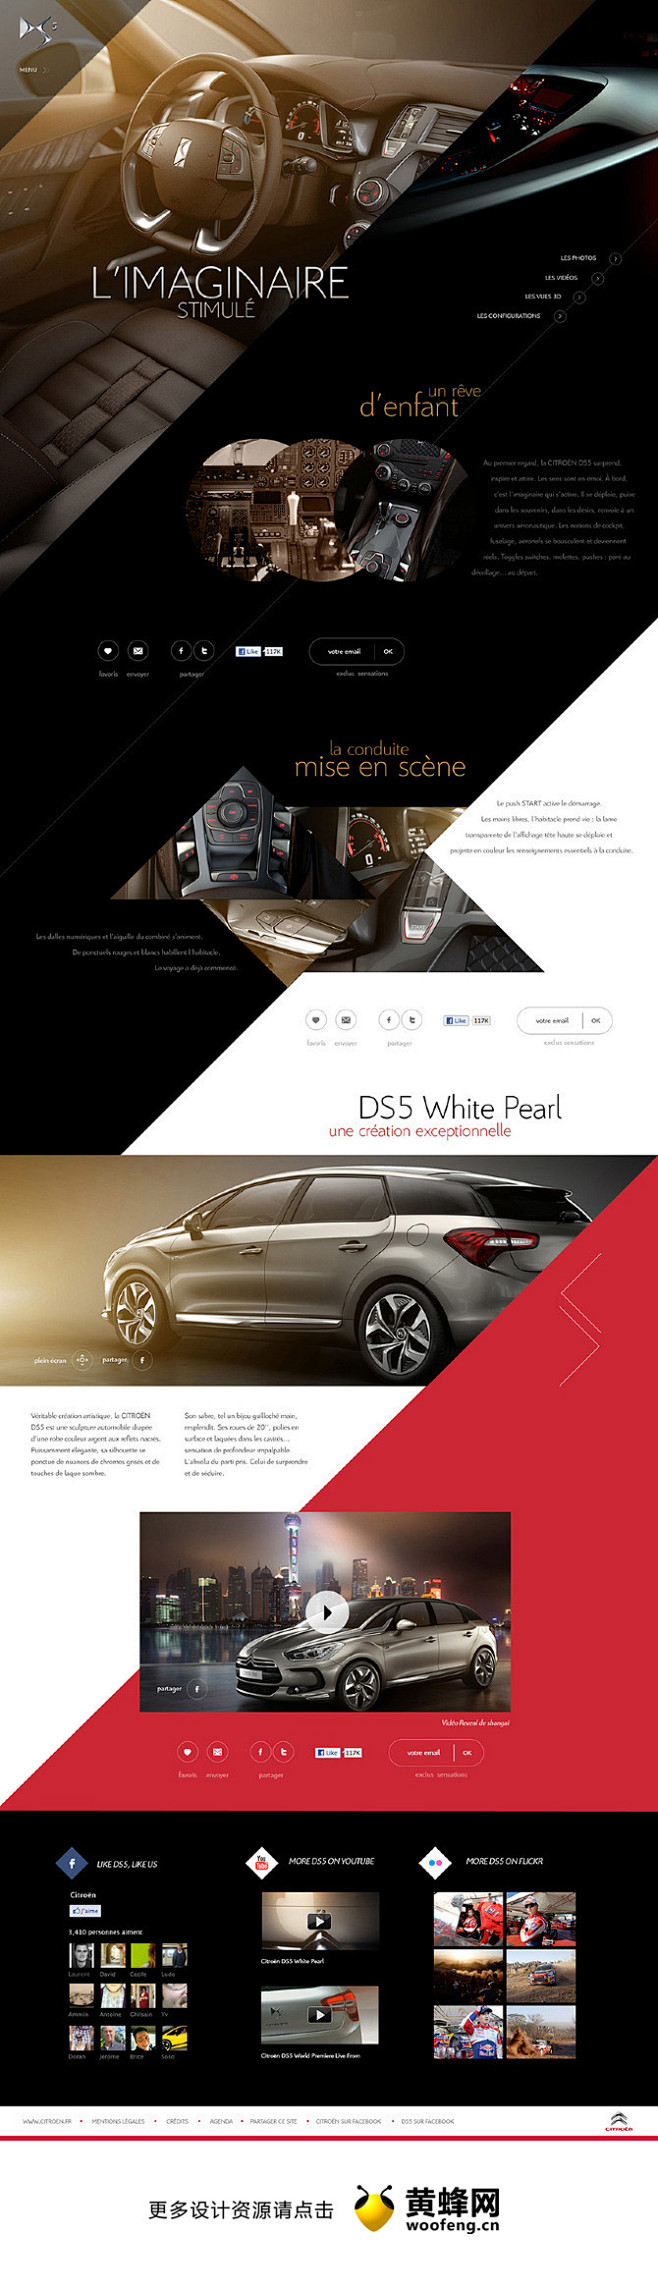 Citroen DS5汽车网站设计截屏 ...